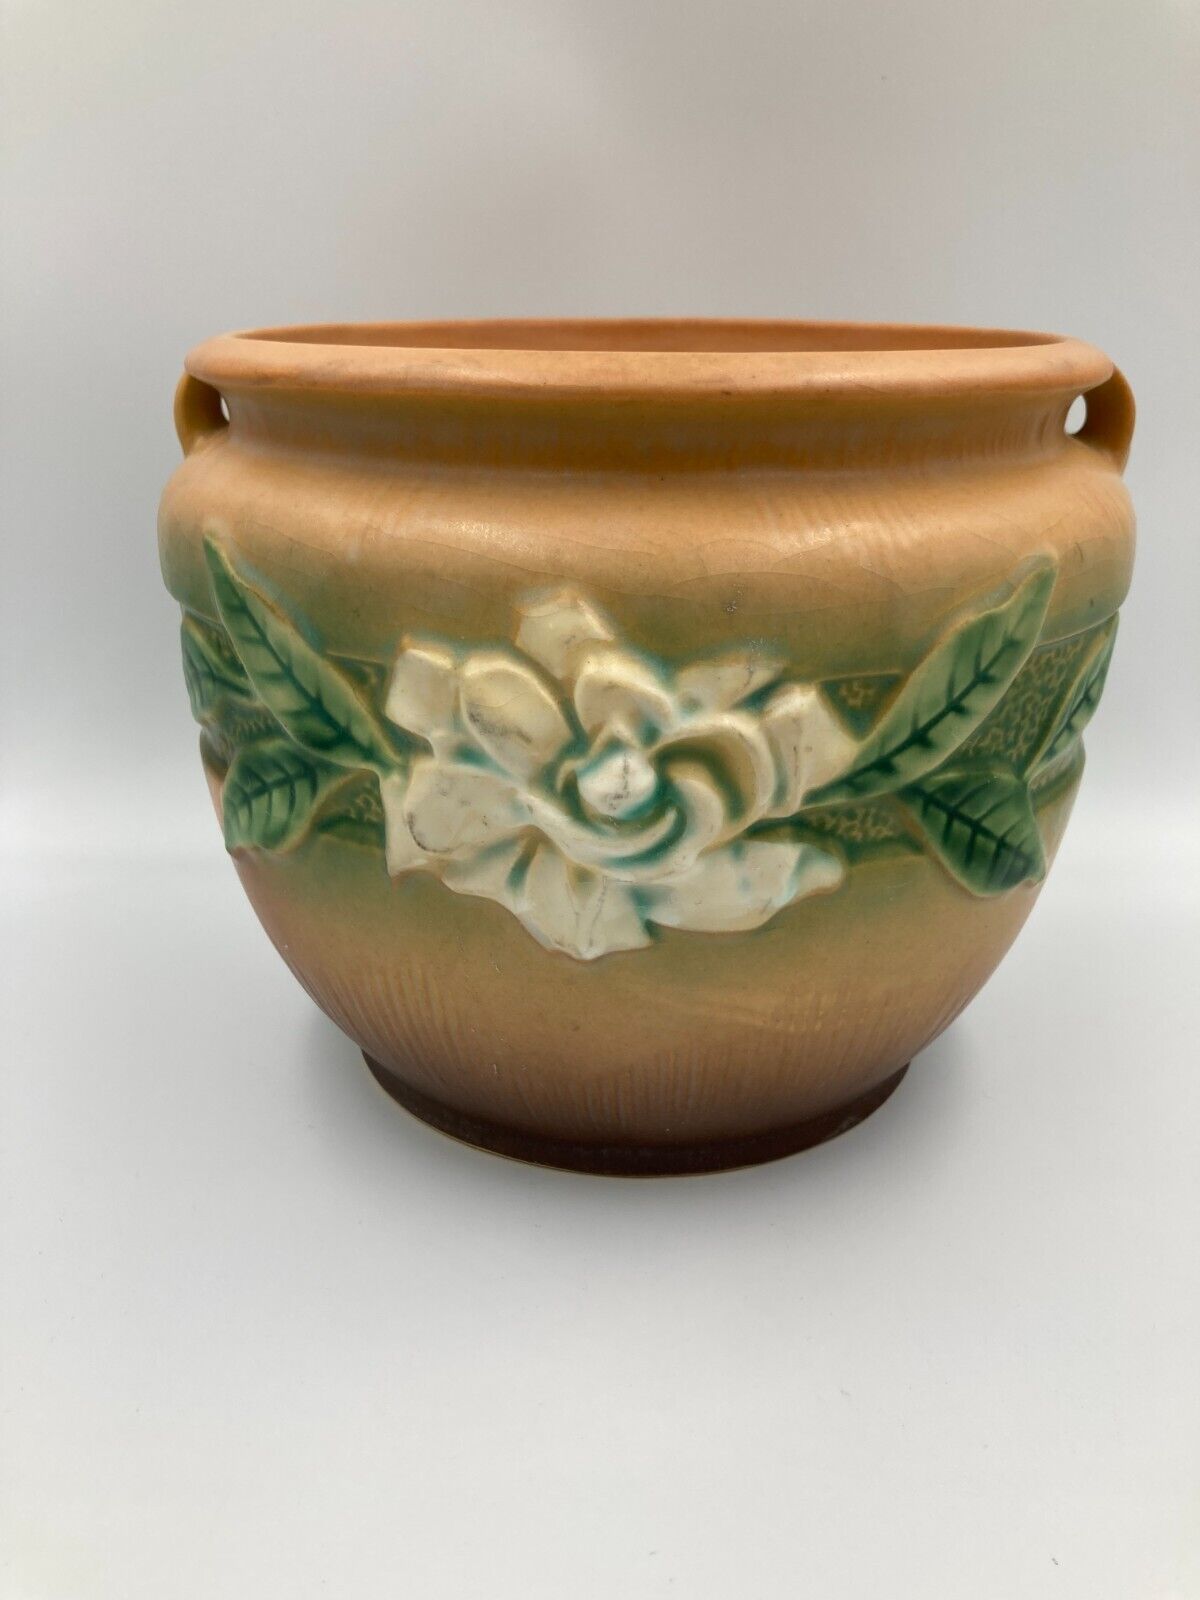 roseville gardenia vase/jardiniere - 601-6 in tan - clean & 